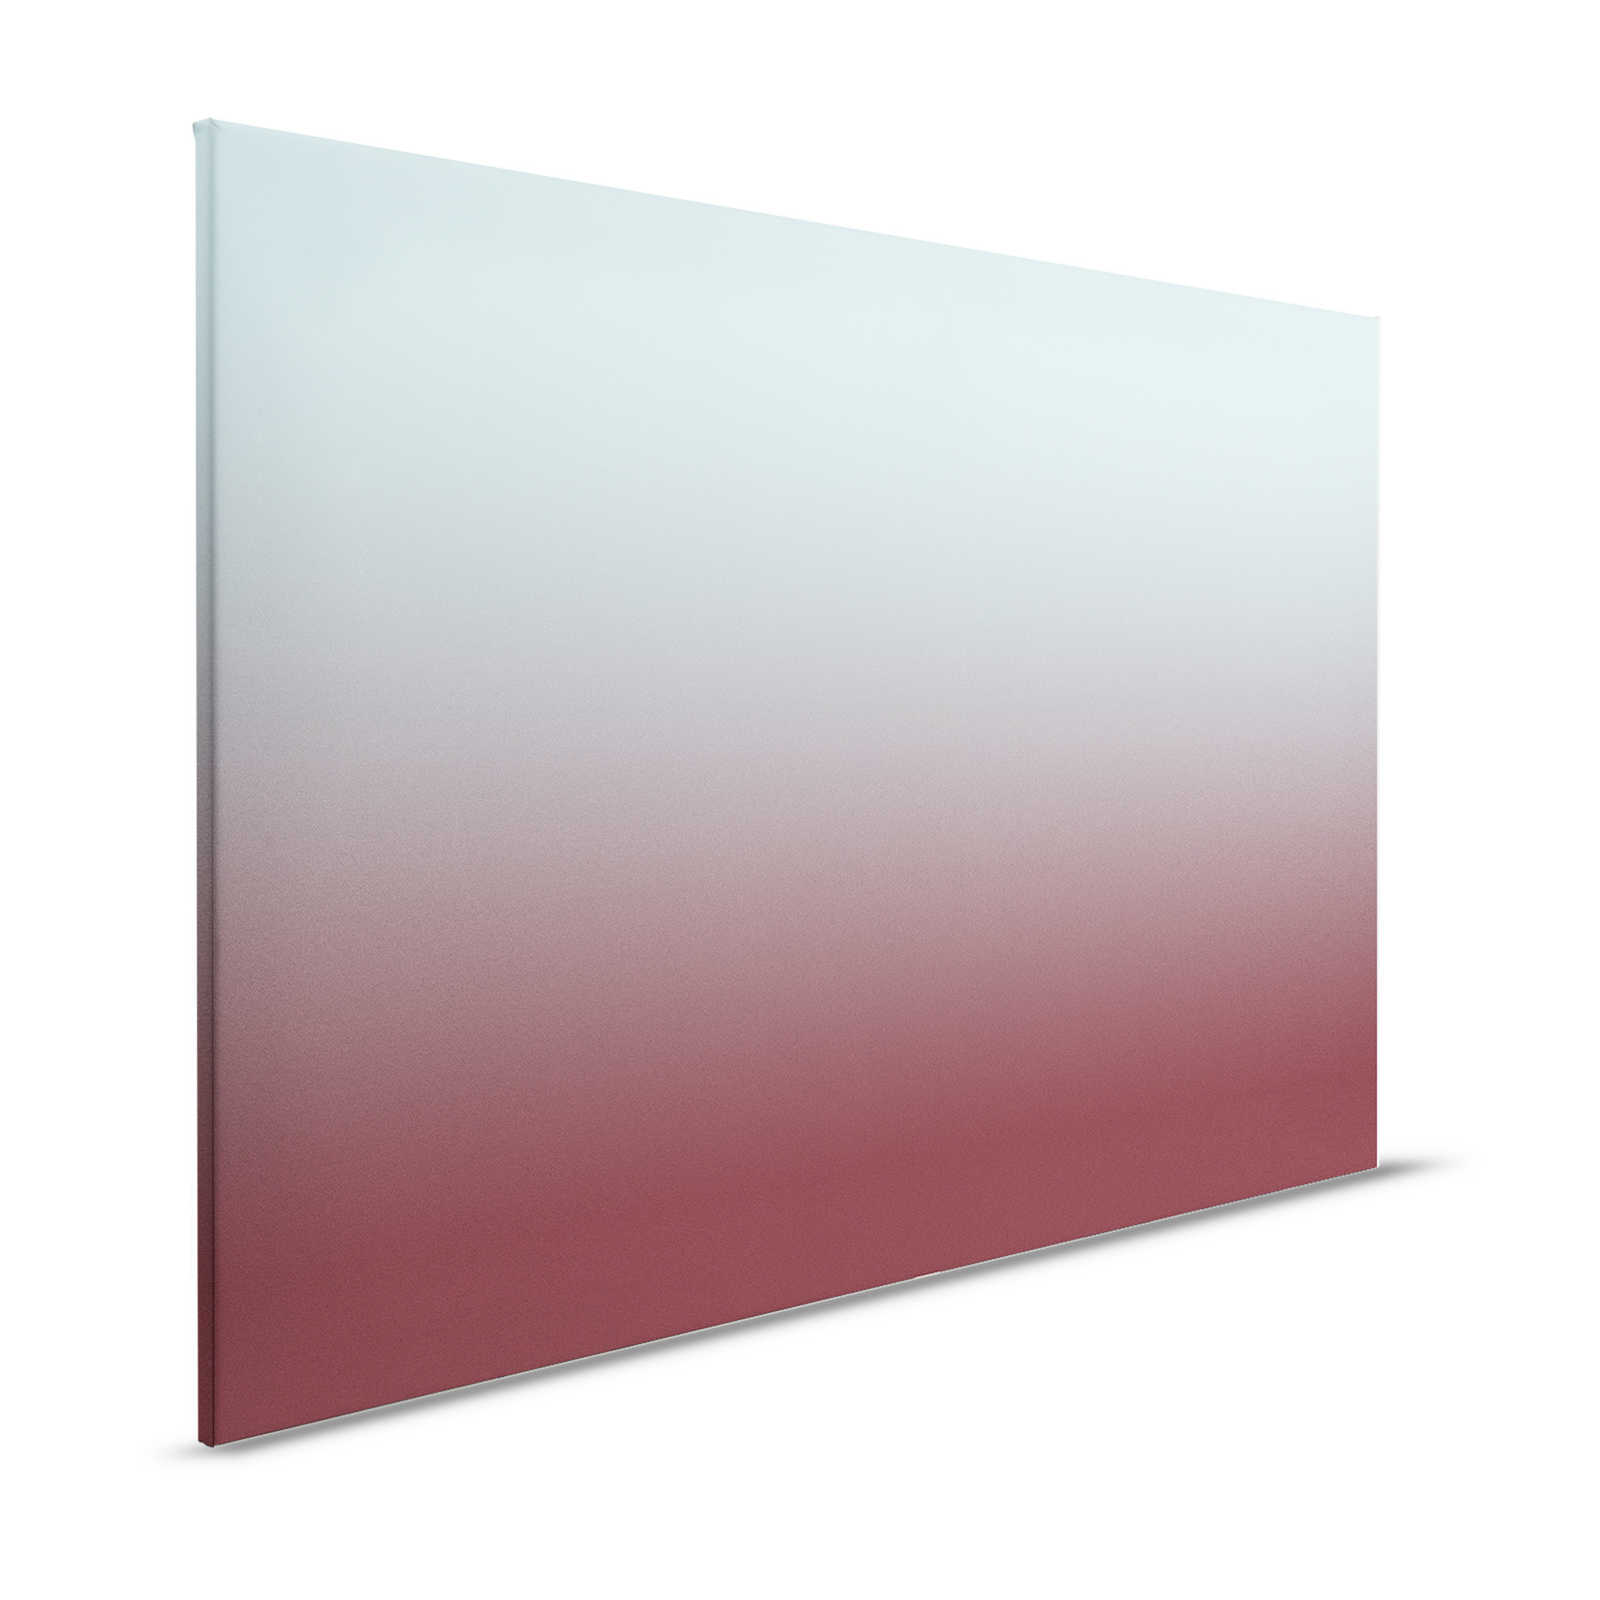 Colour Studio 3 - Ombre Leinwandbild Hellblau & Weinrot mit Farbverlauf – 1,20 m x 0,80 m
